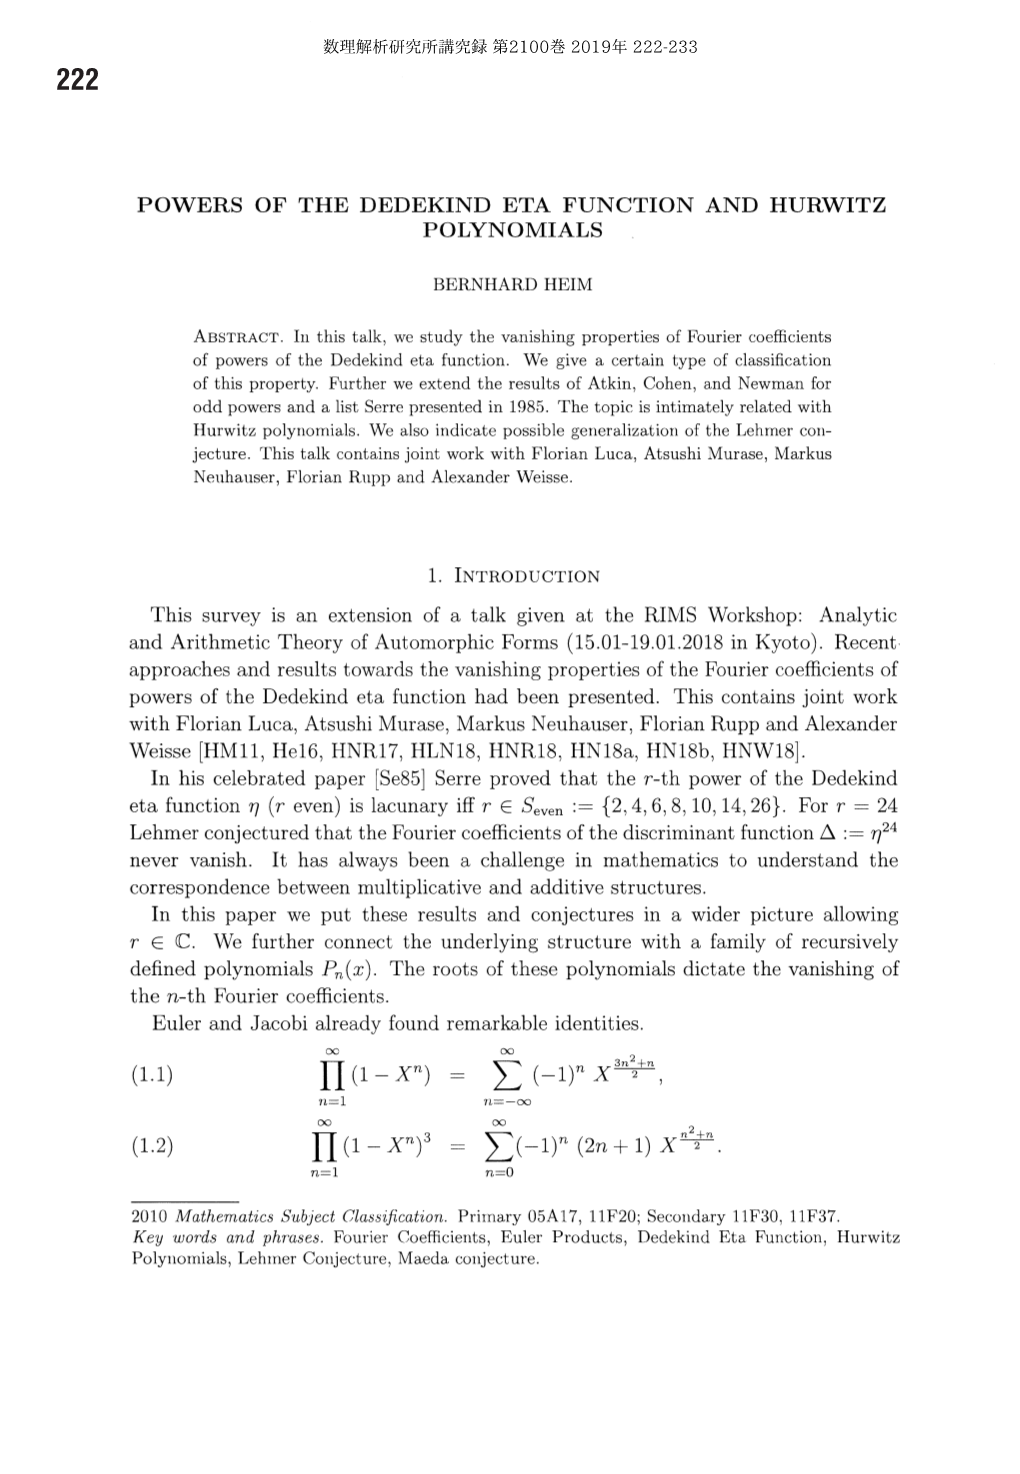 Powers of the Dedekind Eta Function and Hurwitz Polynomials